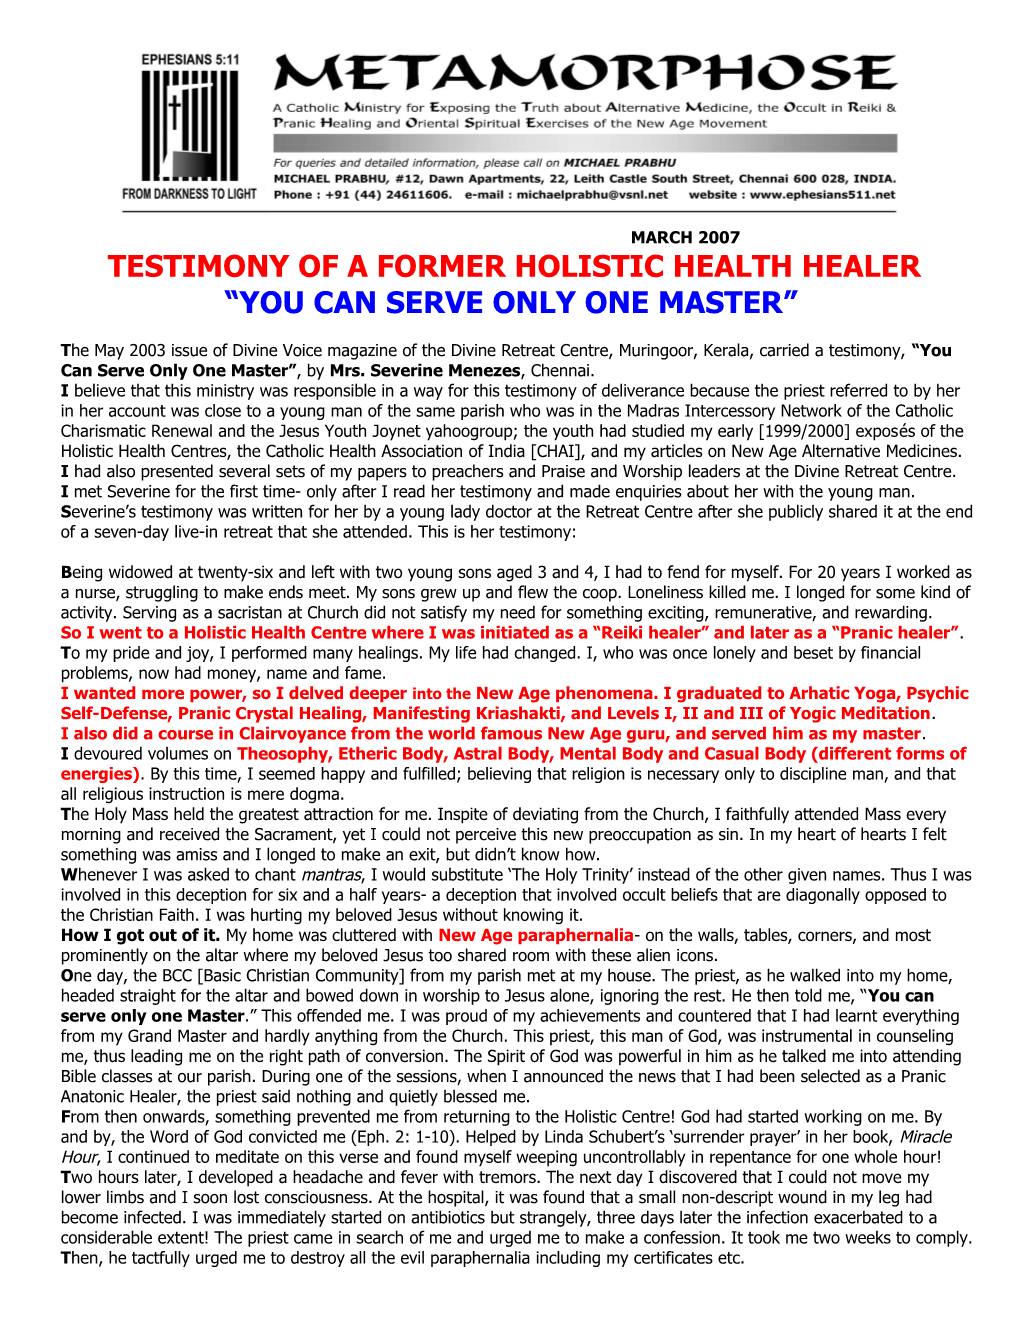 Testimony of a Former Holistic Health Healer